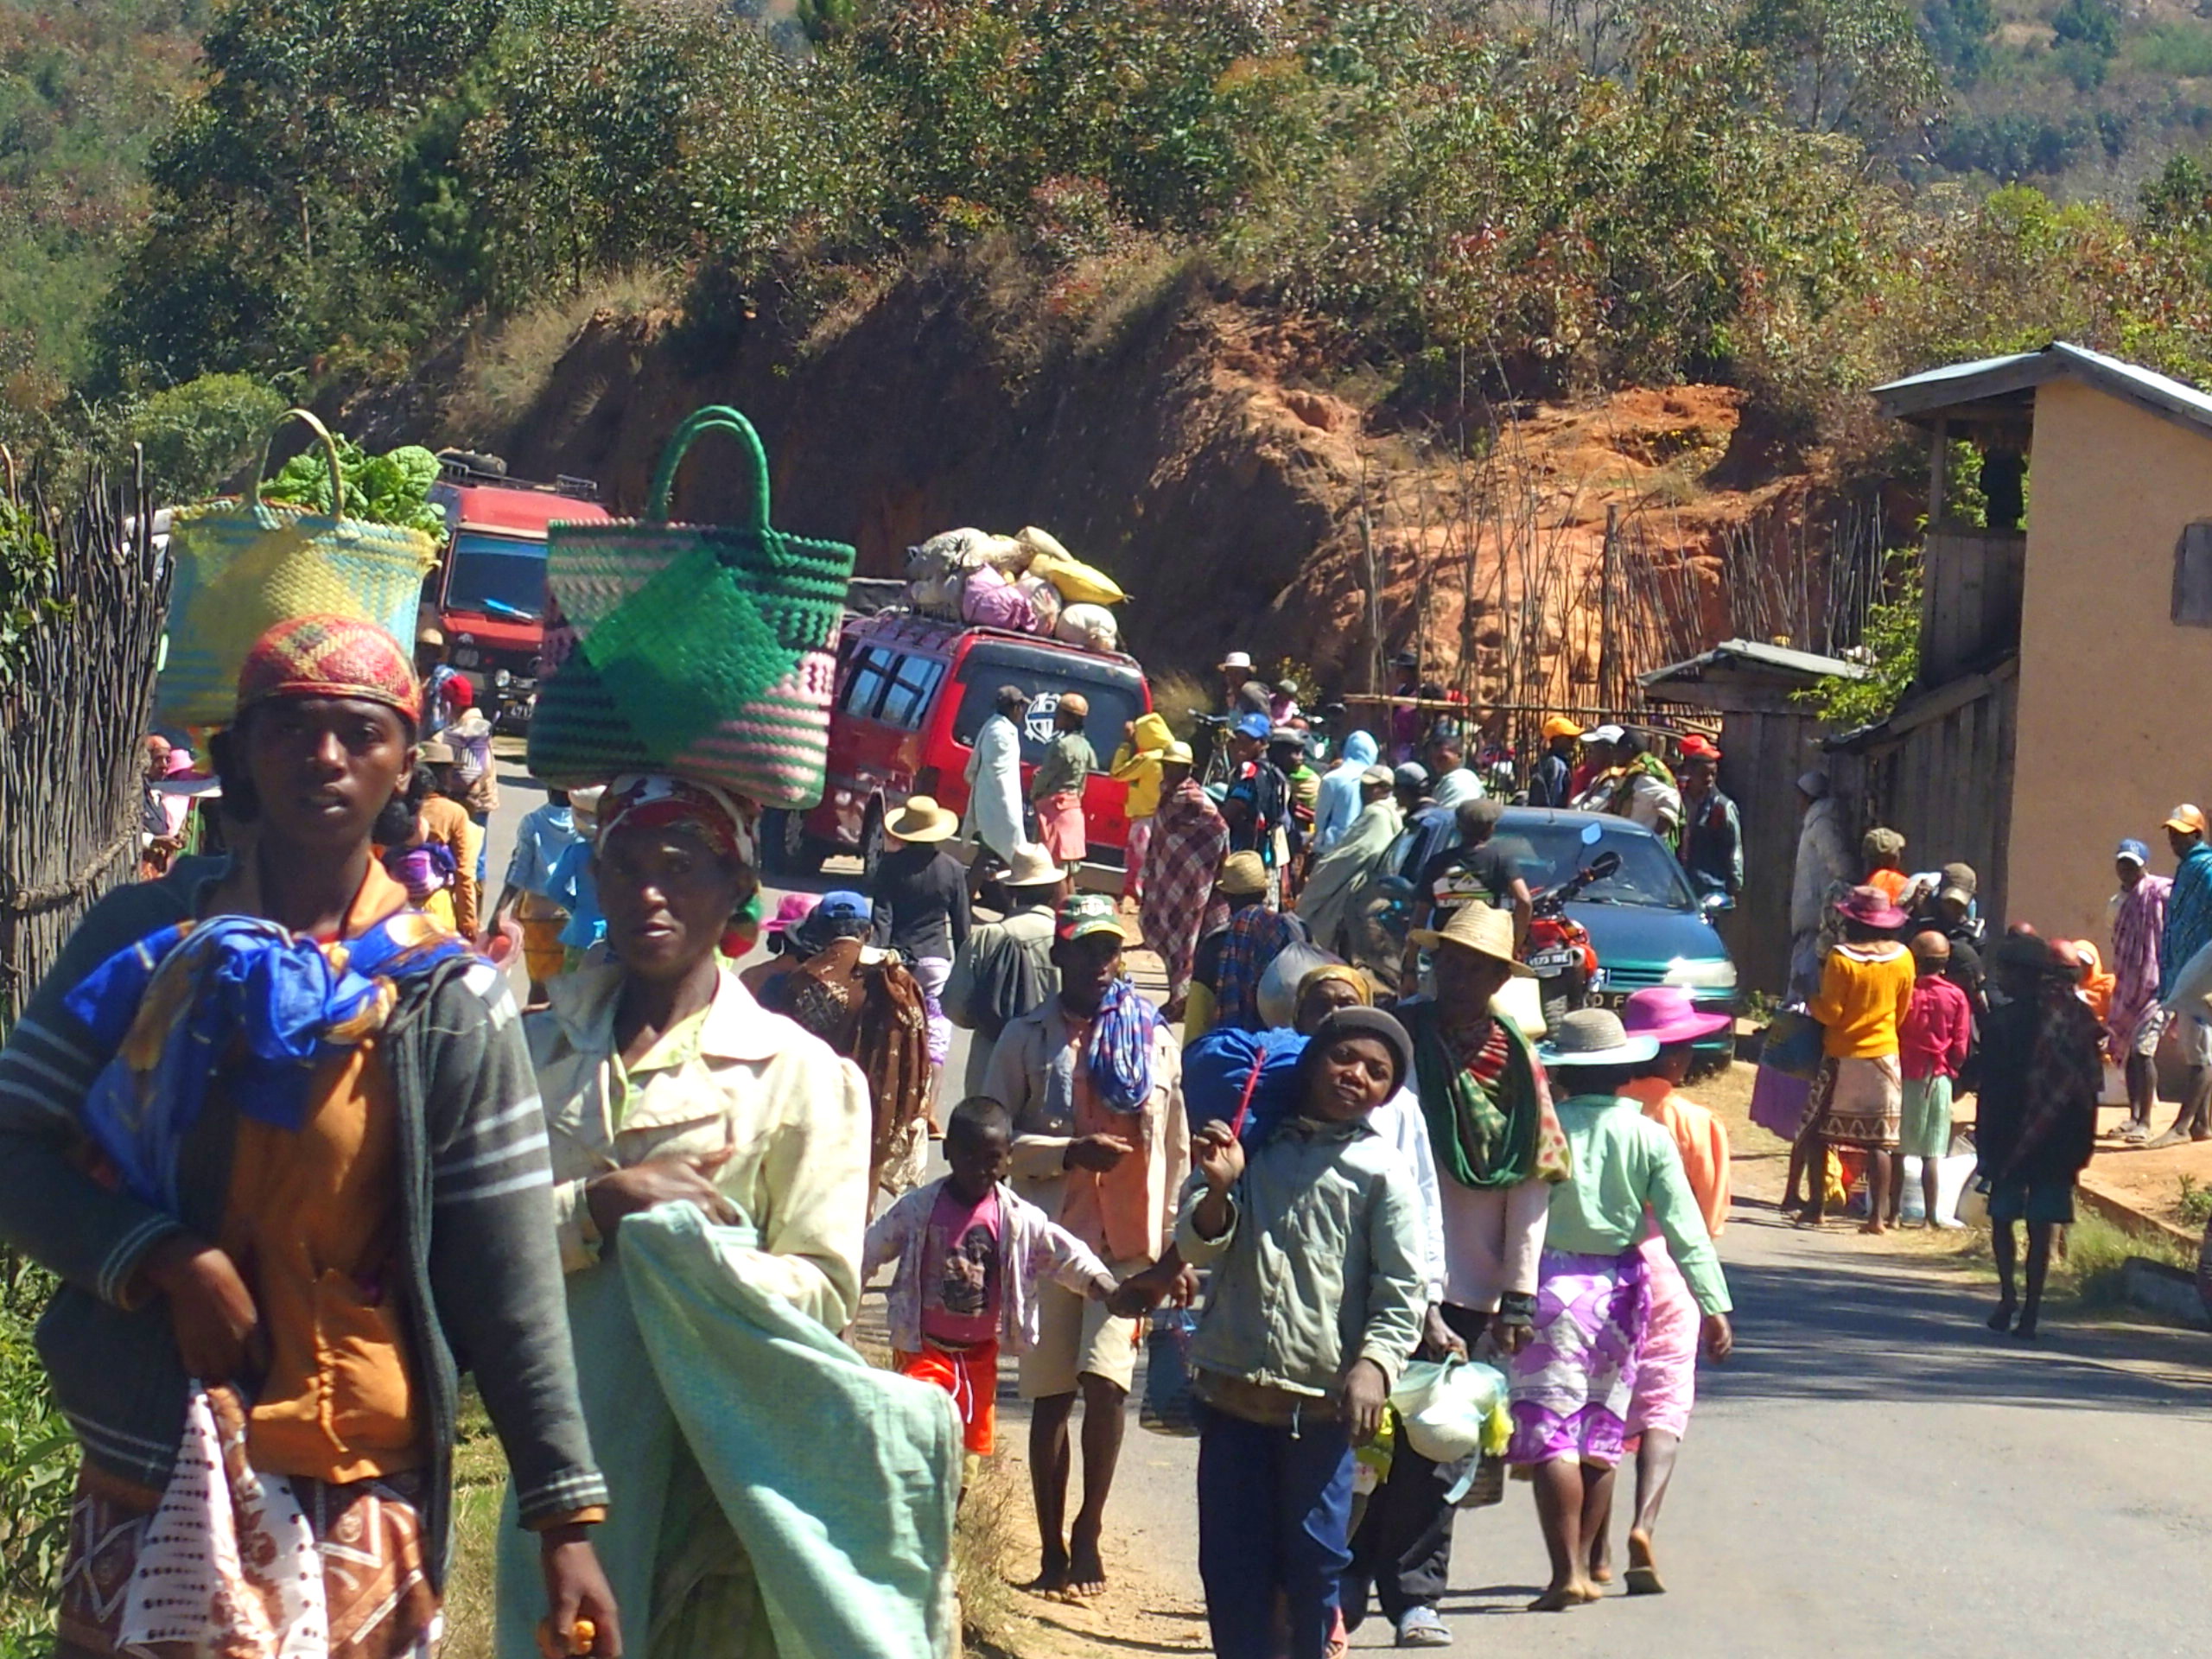 Foule impressionnante qui se rend au marché Madagascar